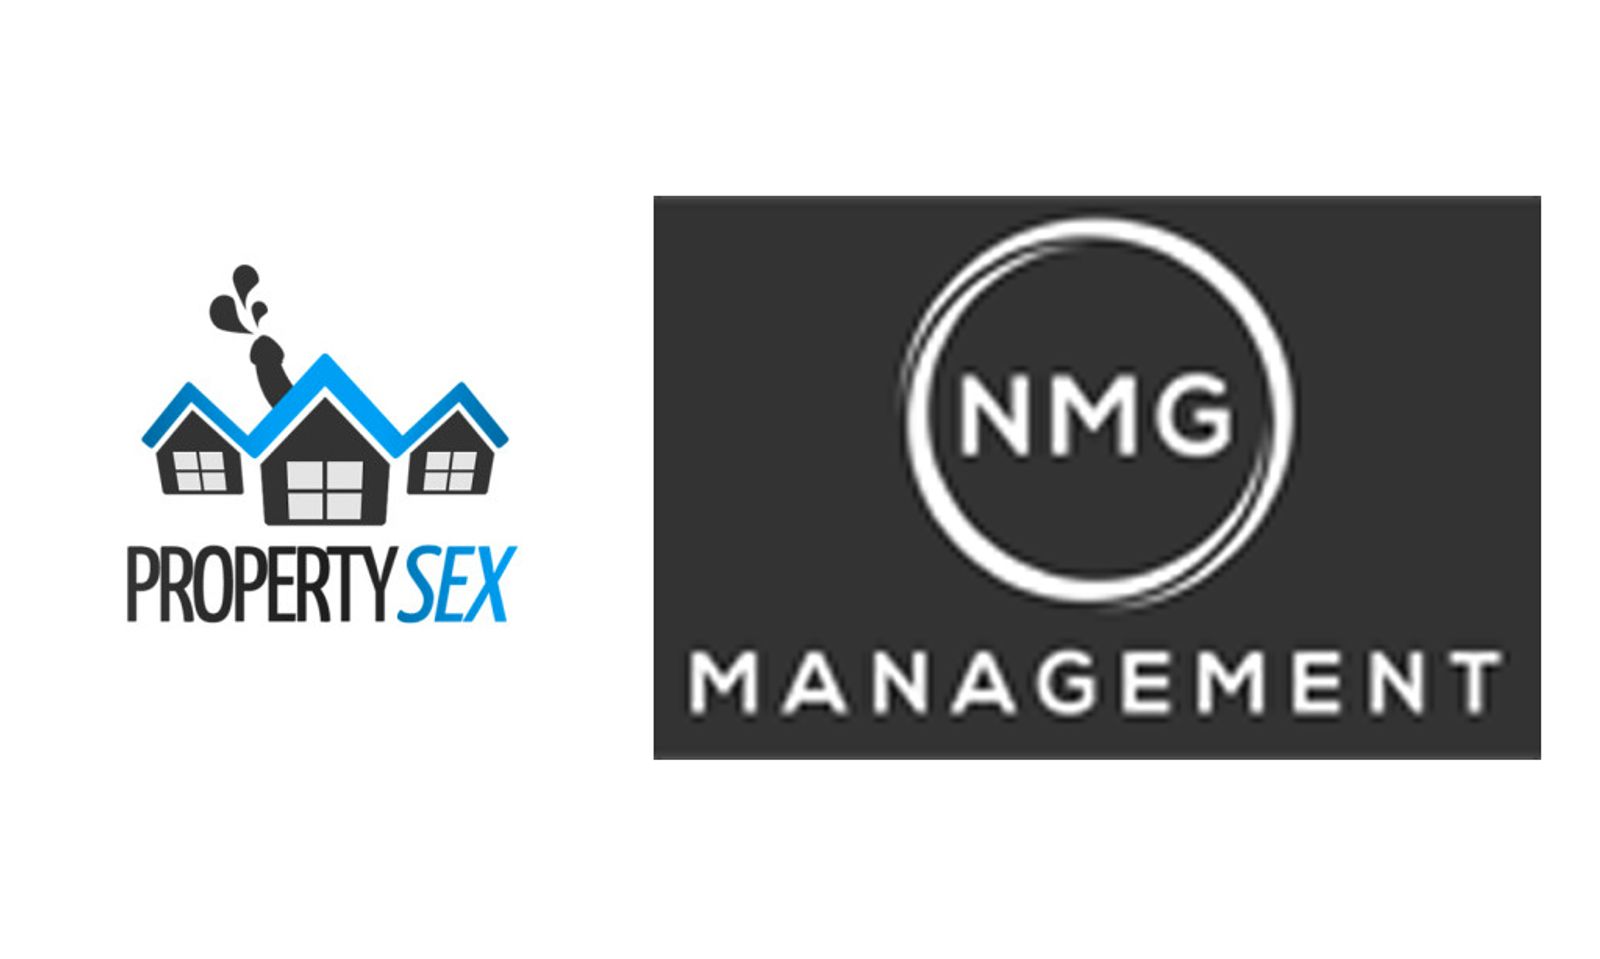 NMG Management Adds New Listing: PropertySex.com